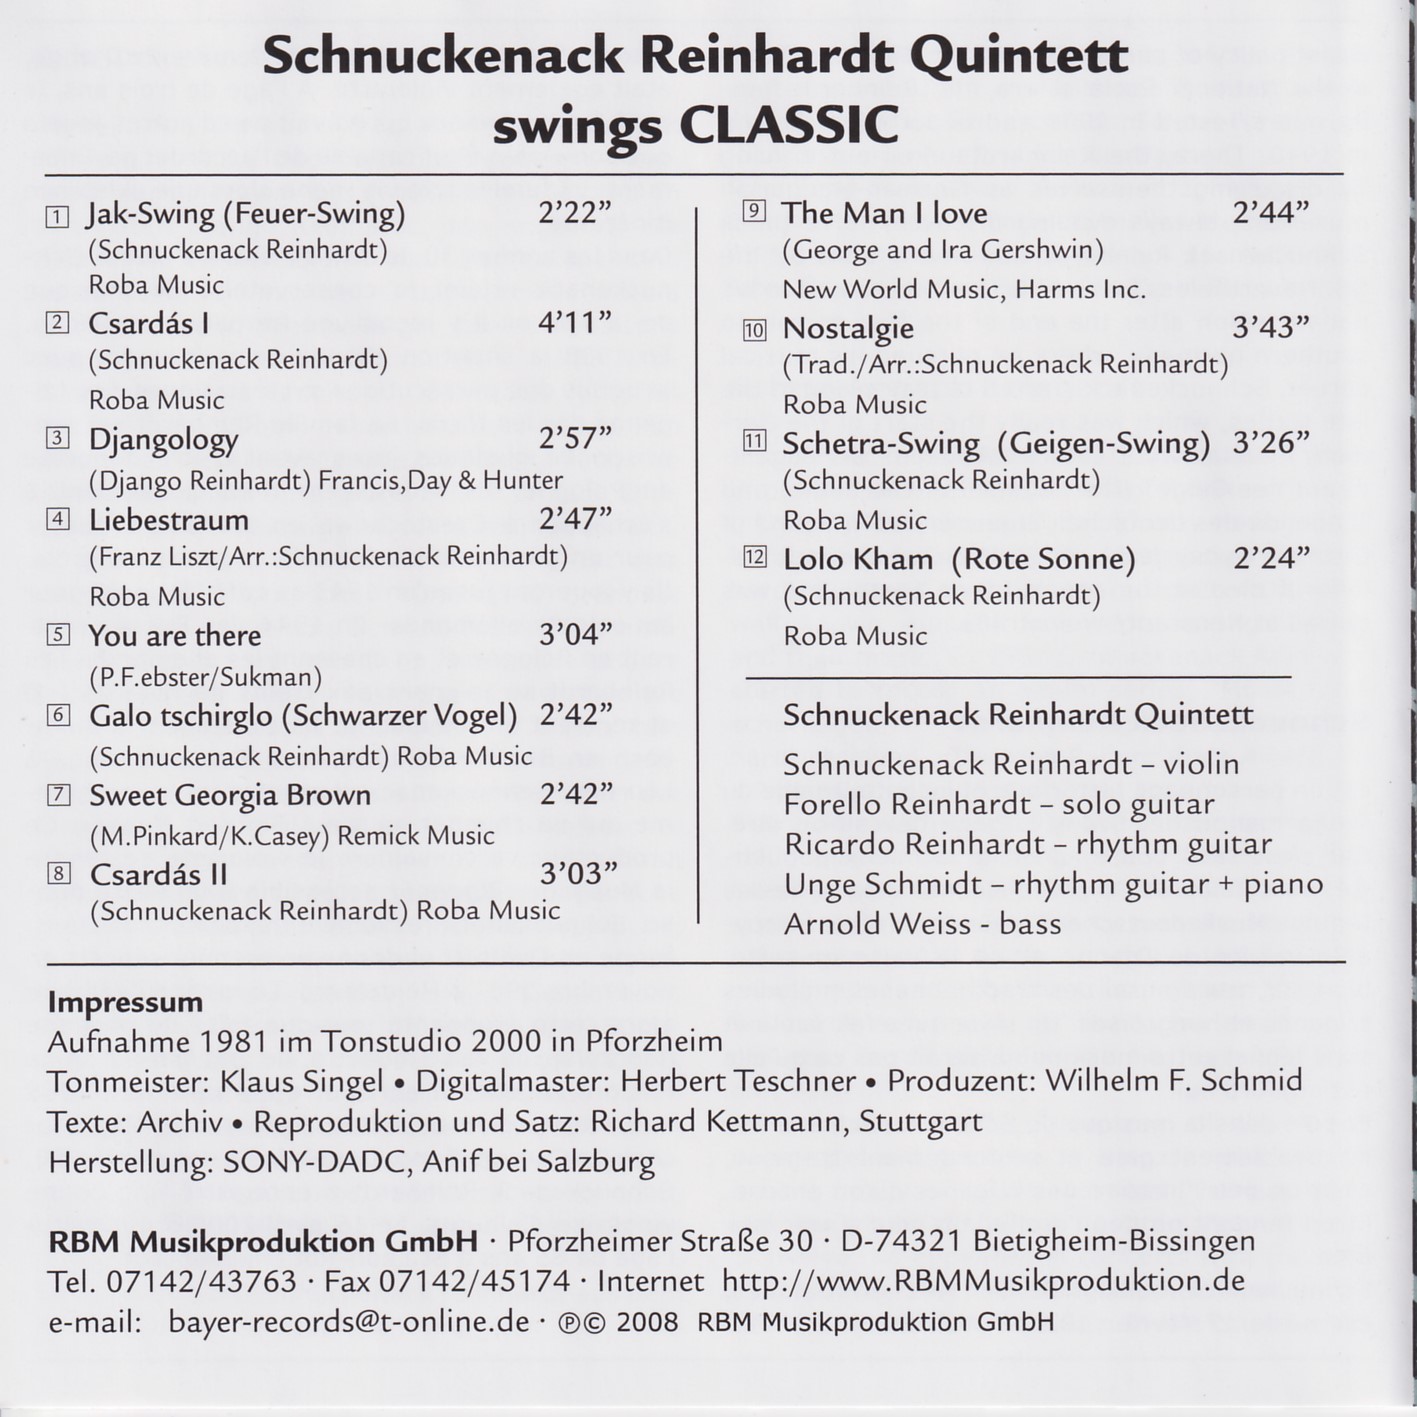 Schnuckenack Reinhardt Quintett  - swings classic